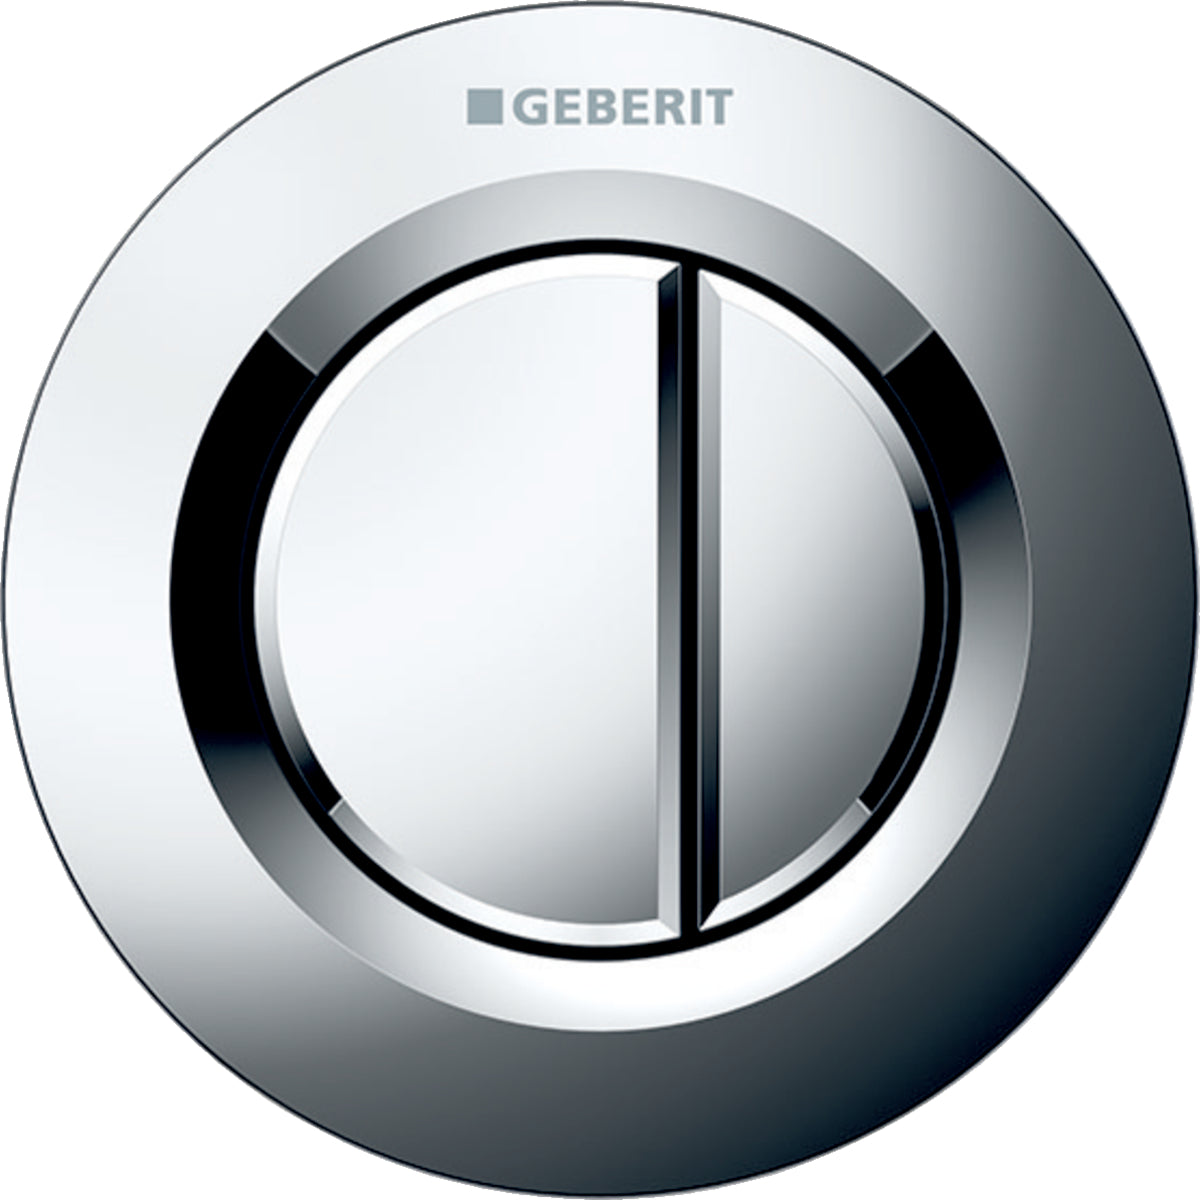 Geberit Type 01 Remote Flush Actuation for Dual Flush